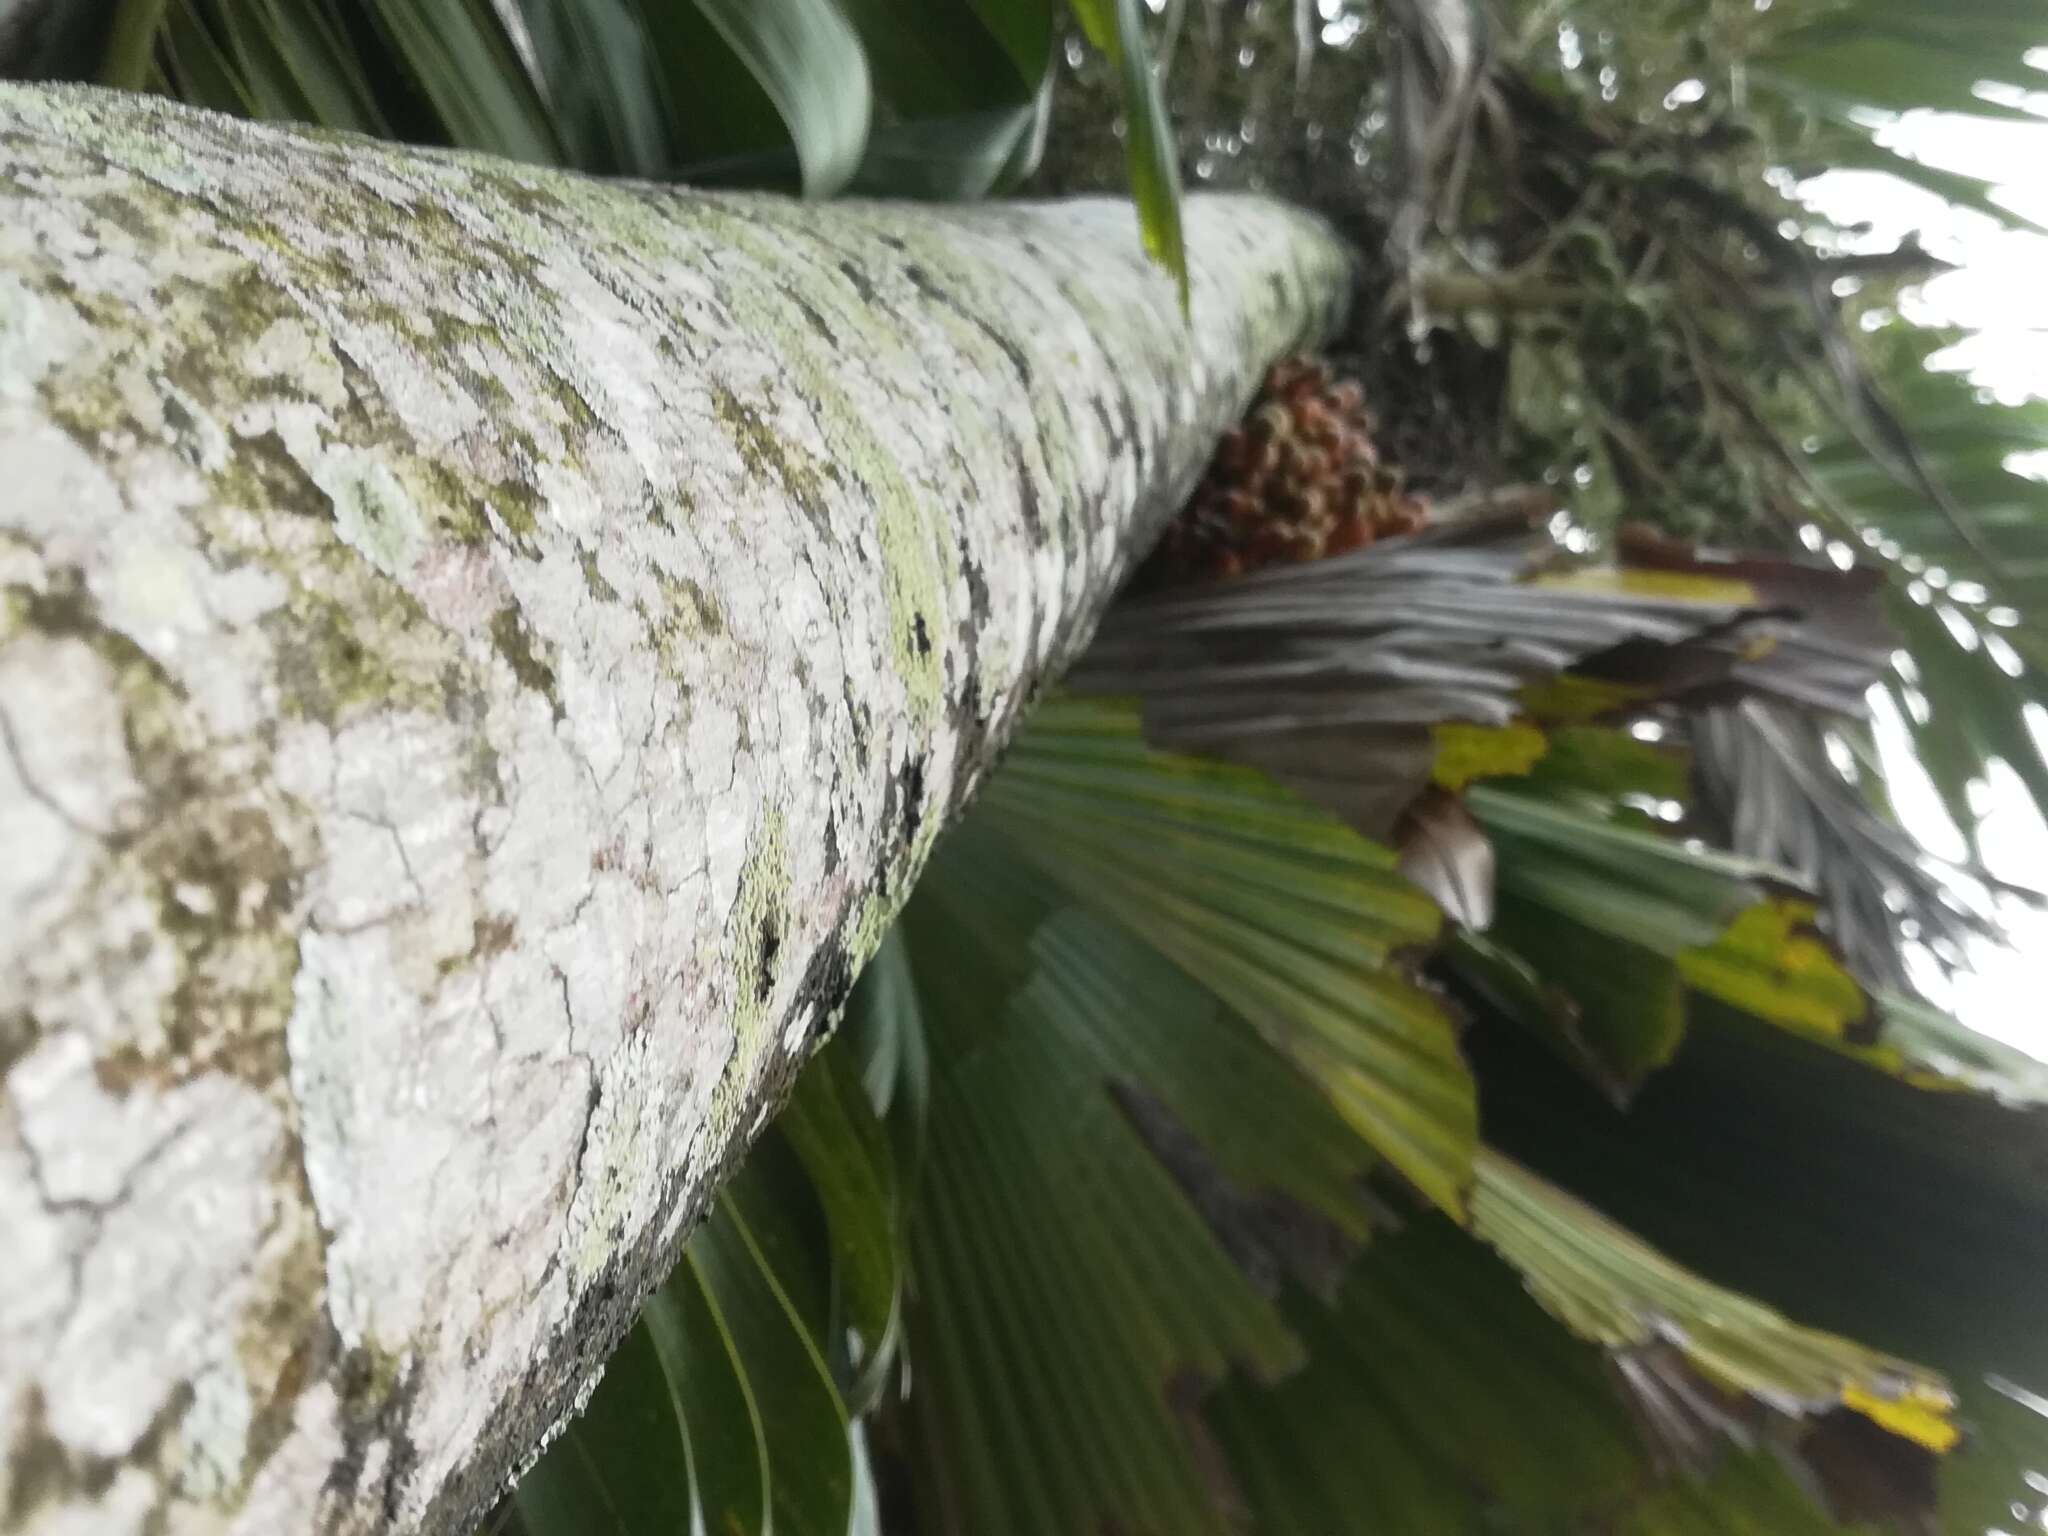 Image of betel palm